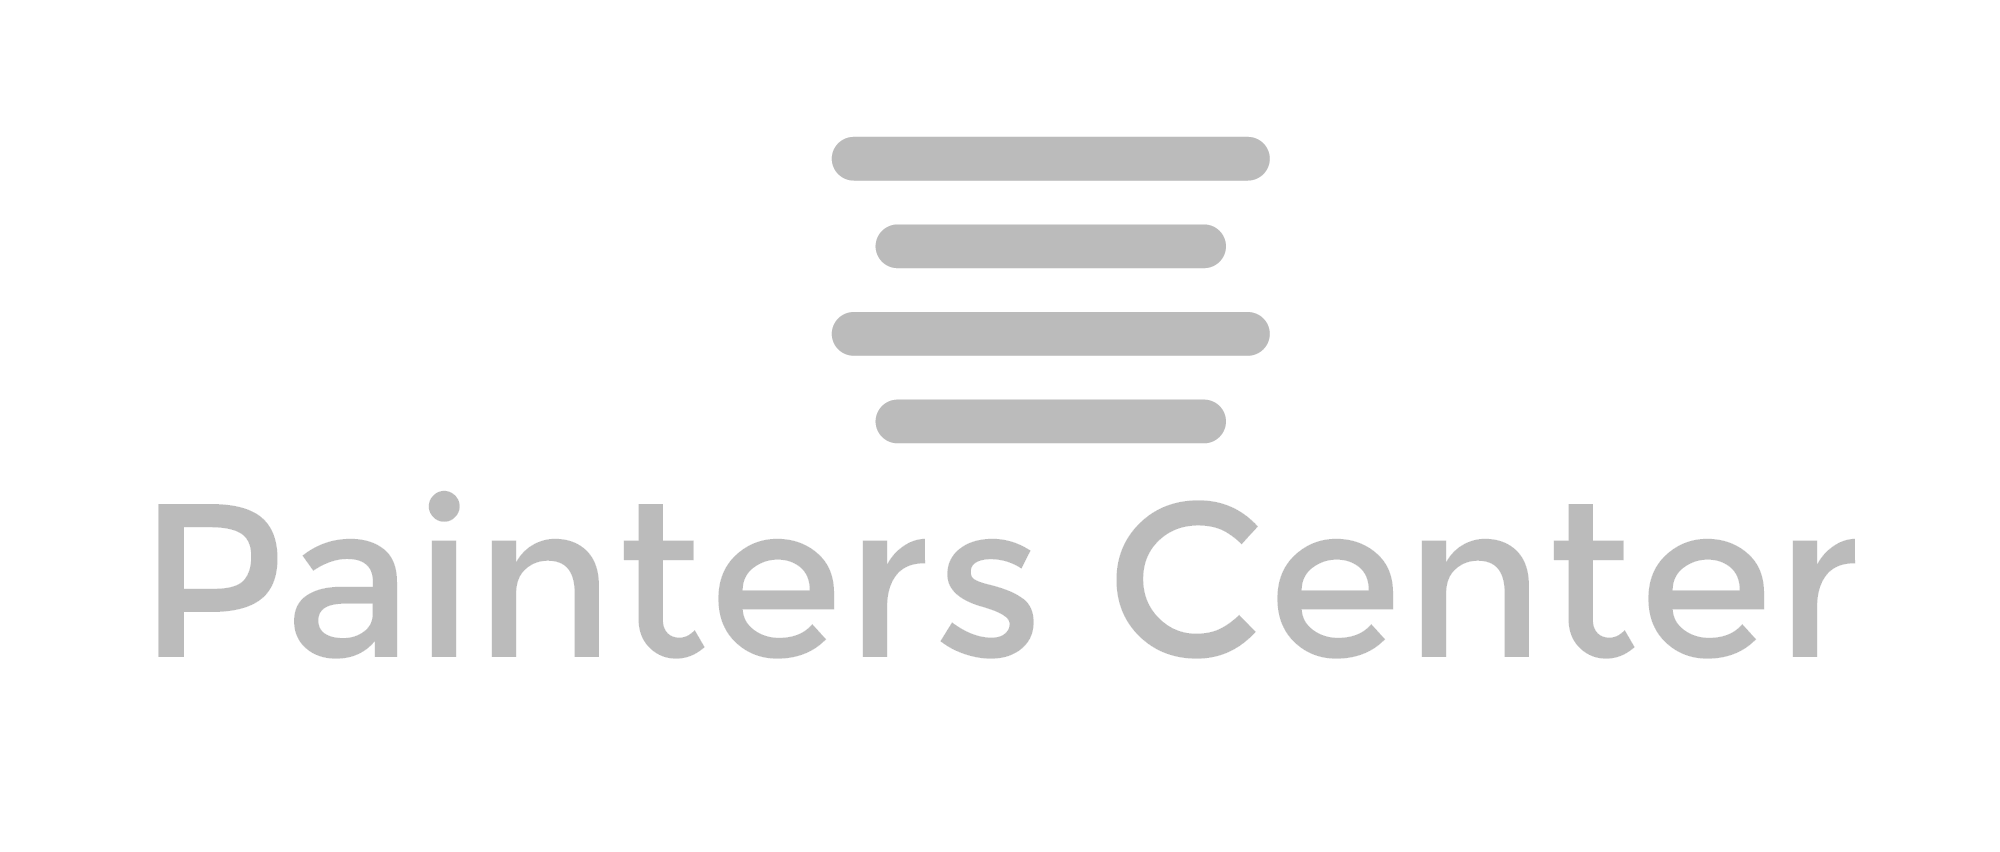 Painters Center-logo.fw.png